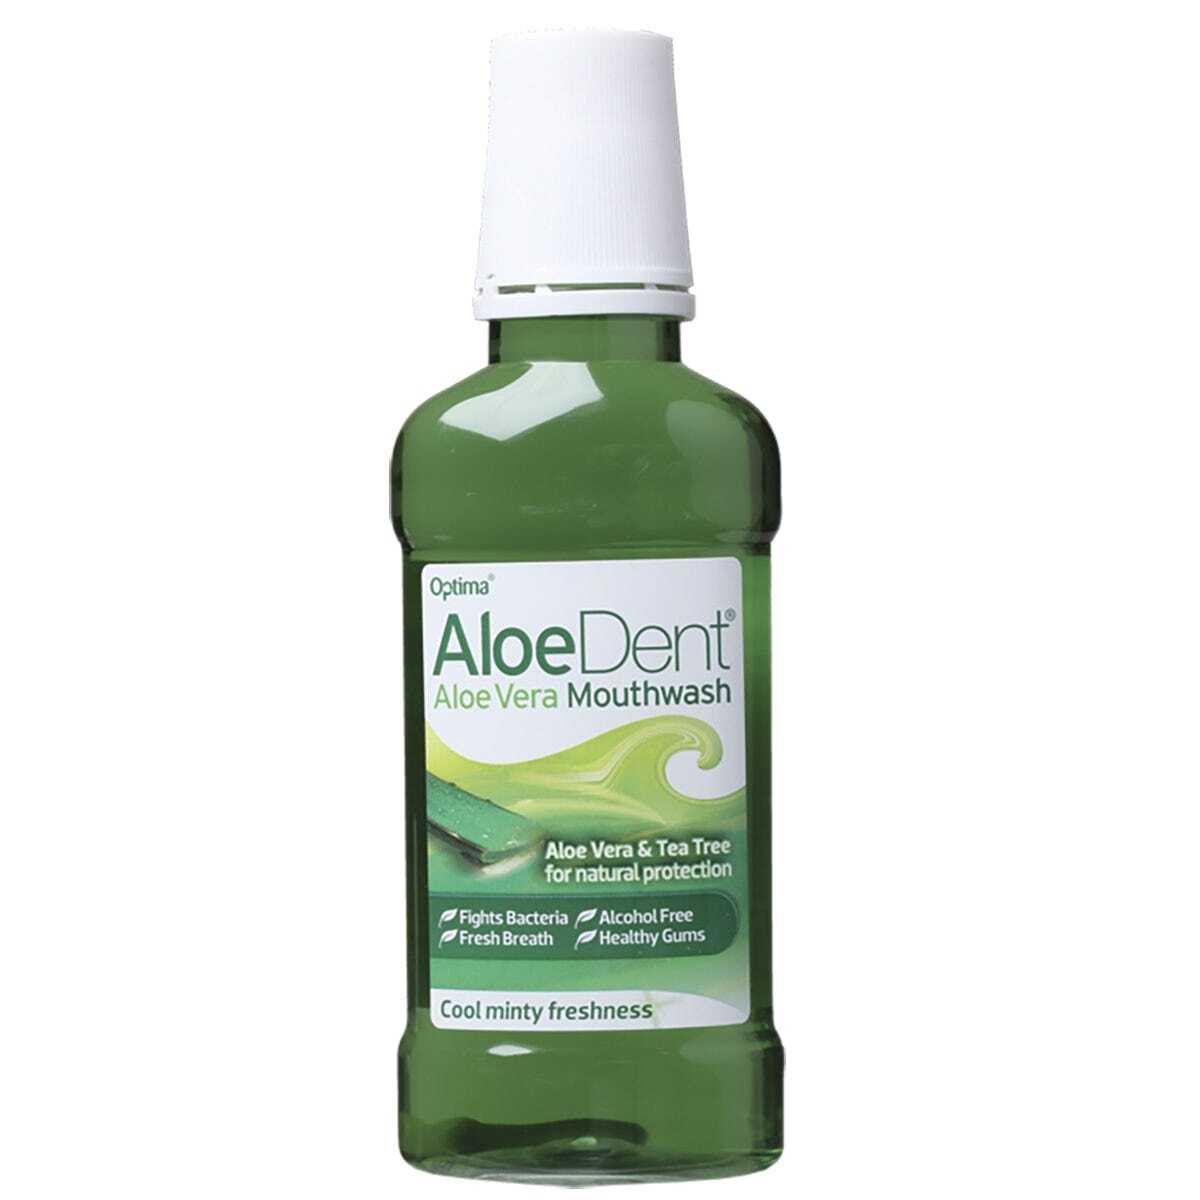 Aloe Dent Aloe Vera And Tea Tree Mouthwash 250ml Healthy Being